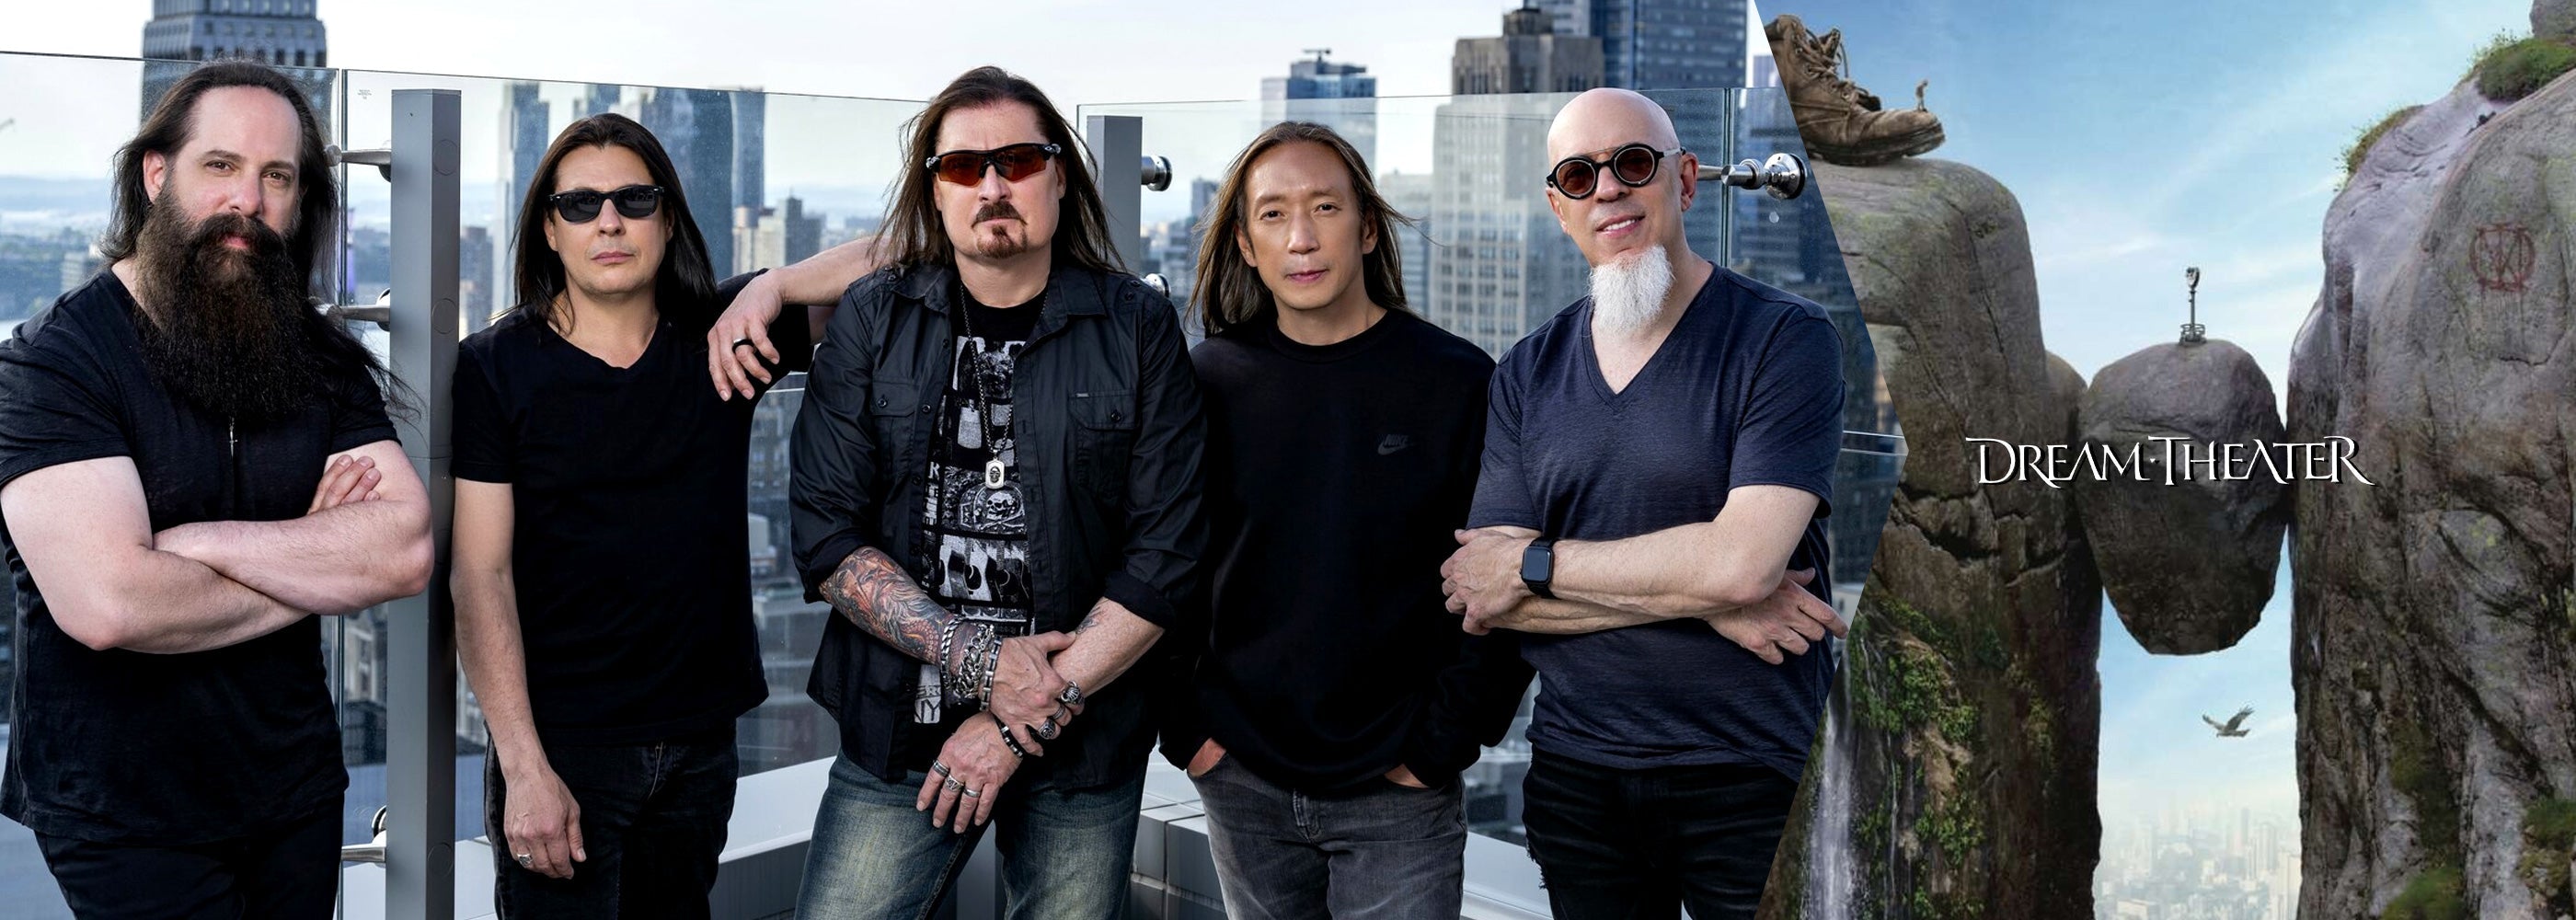 Dream Theater - Header